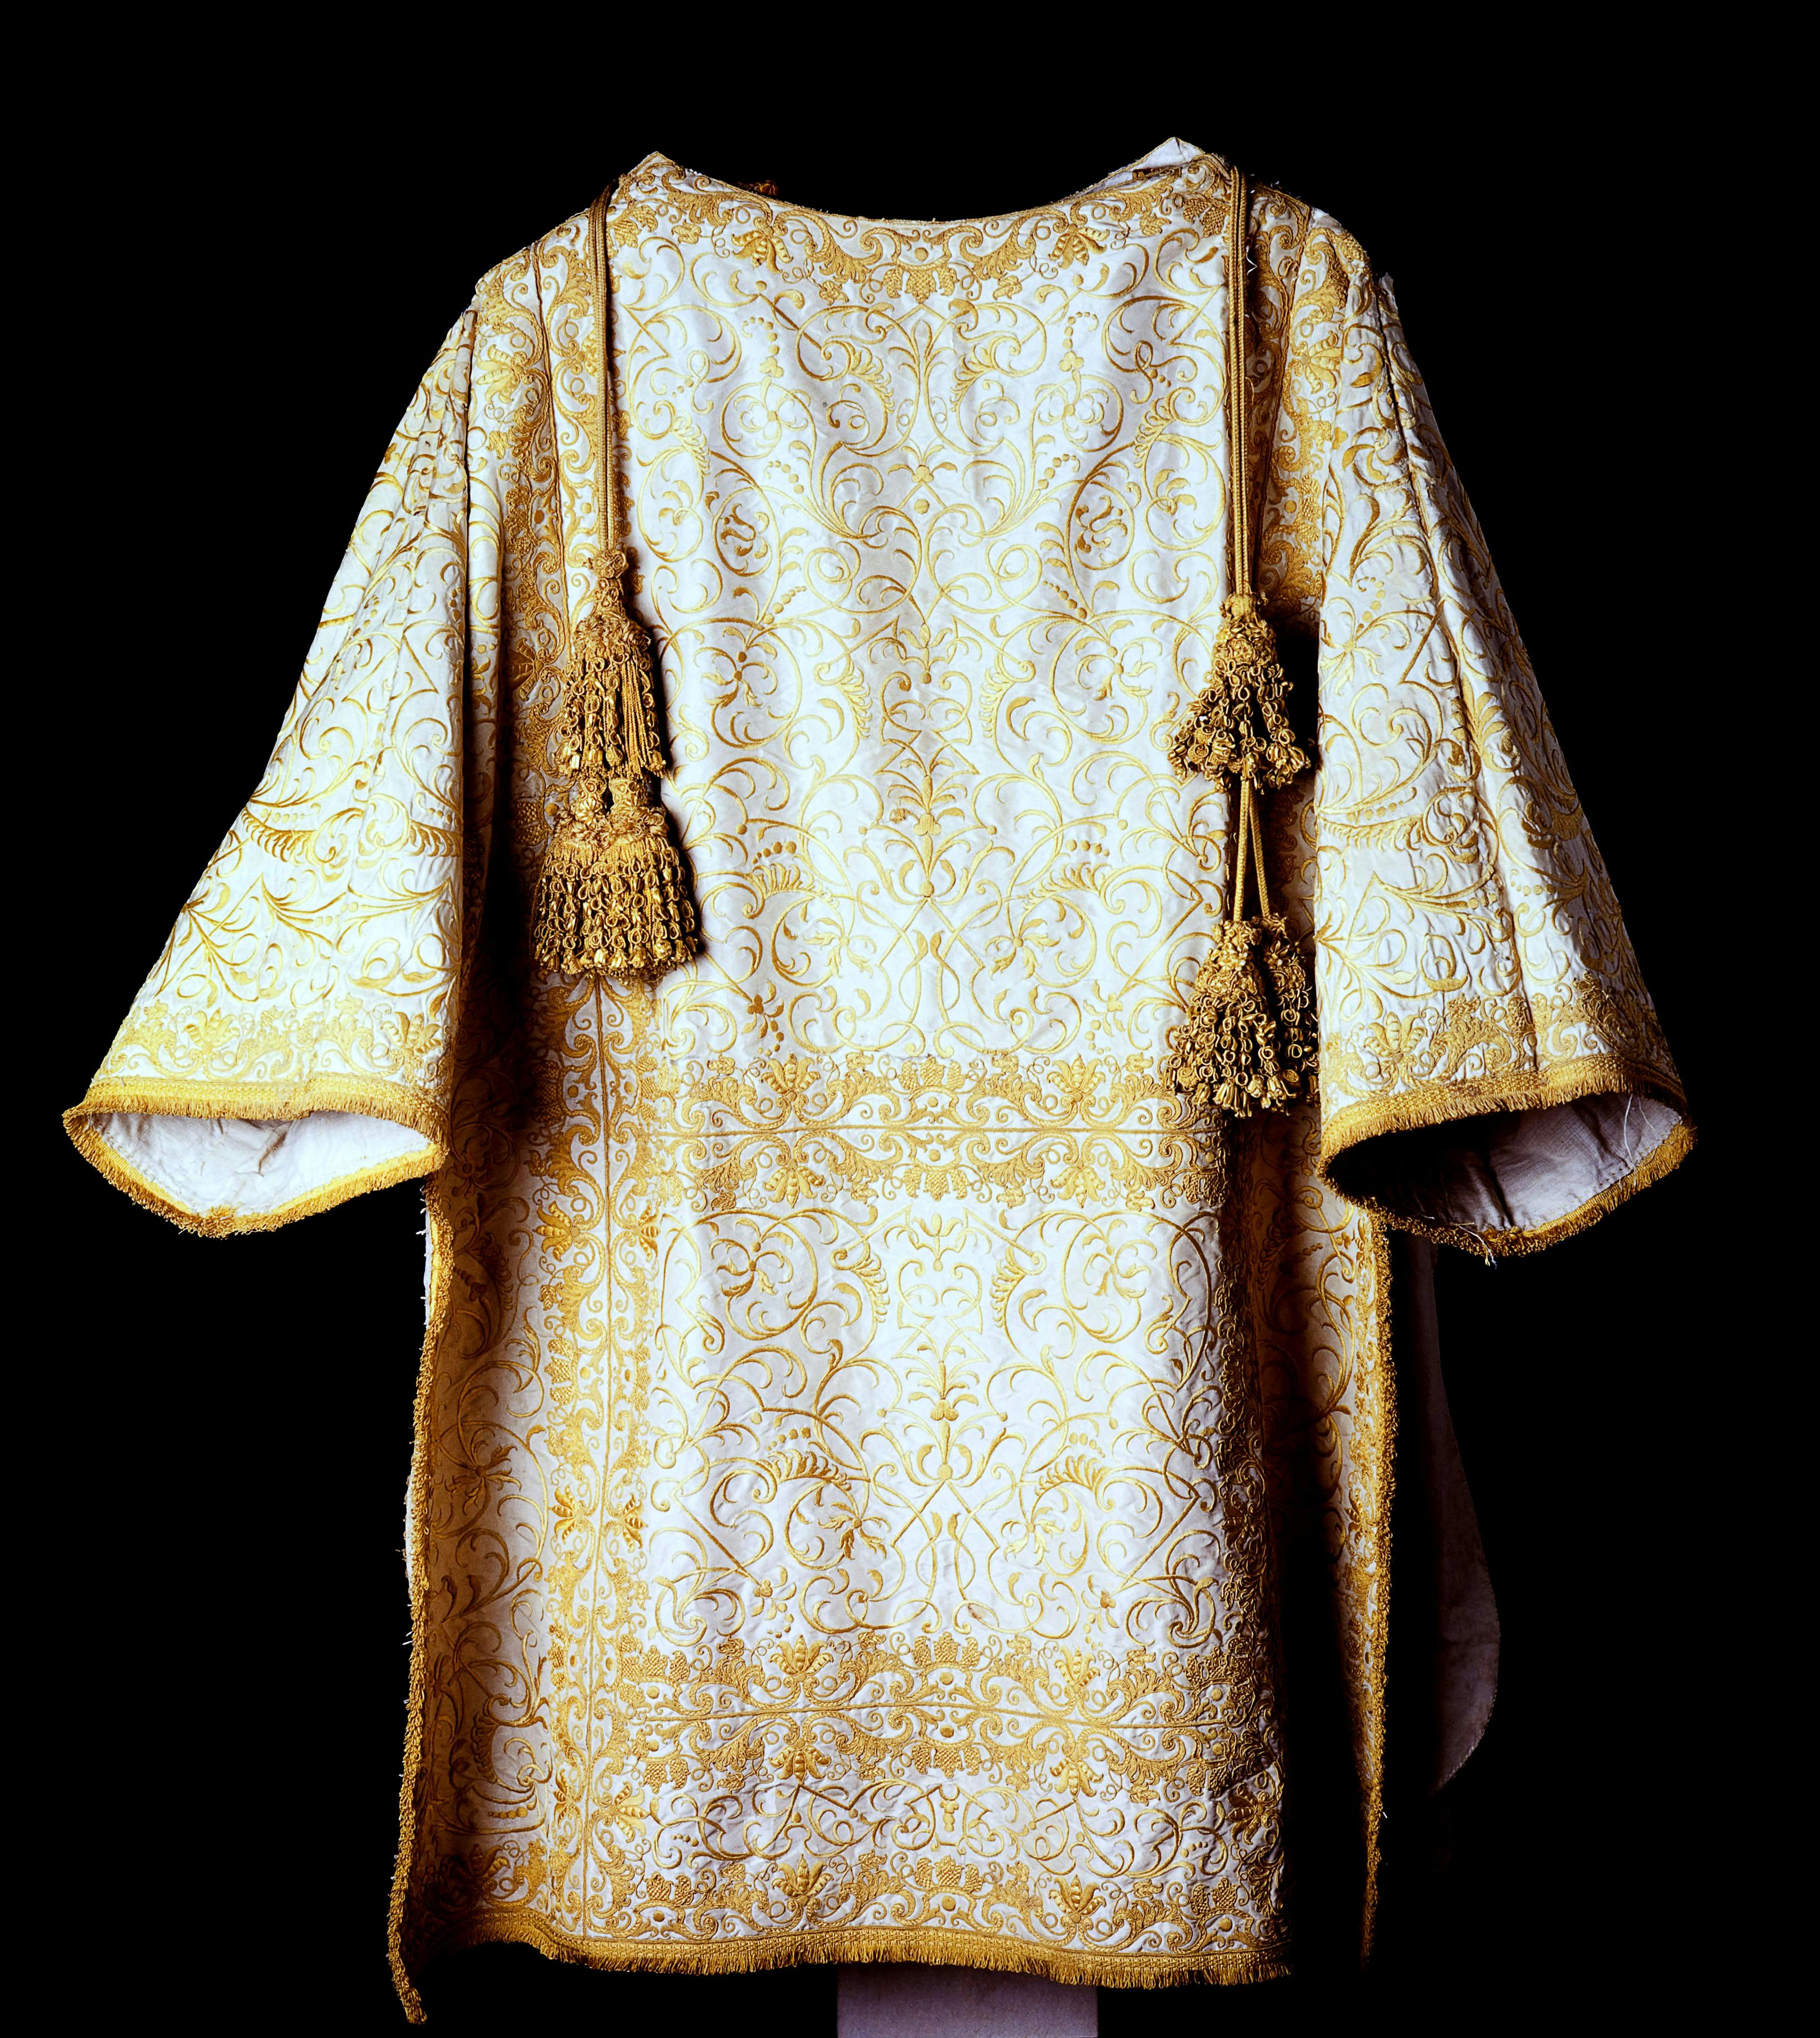 Vestimenta de la primera mitad del siglo XVIII